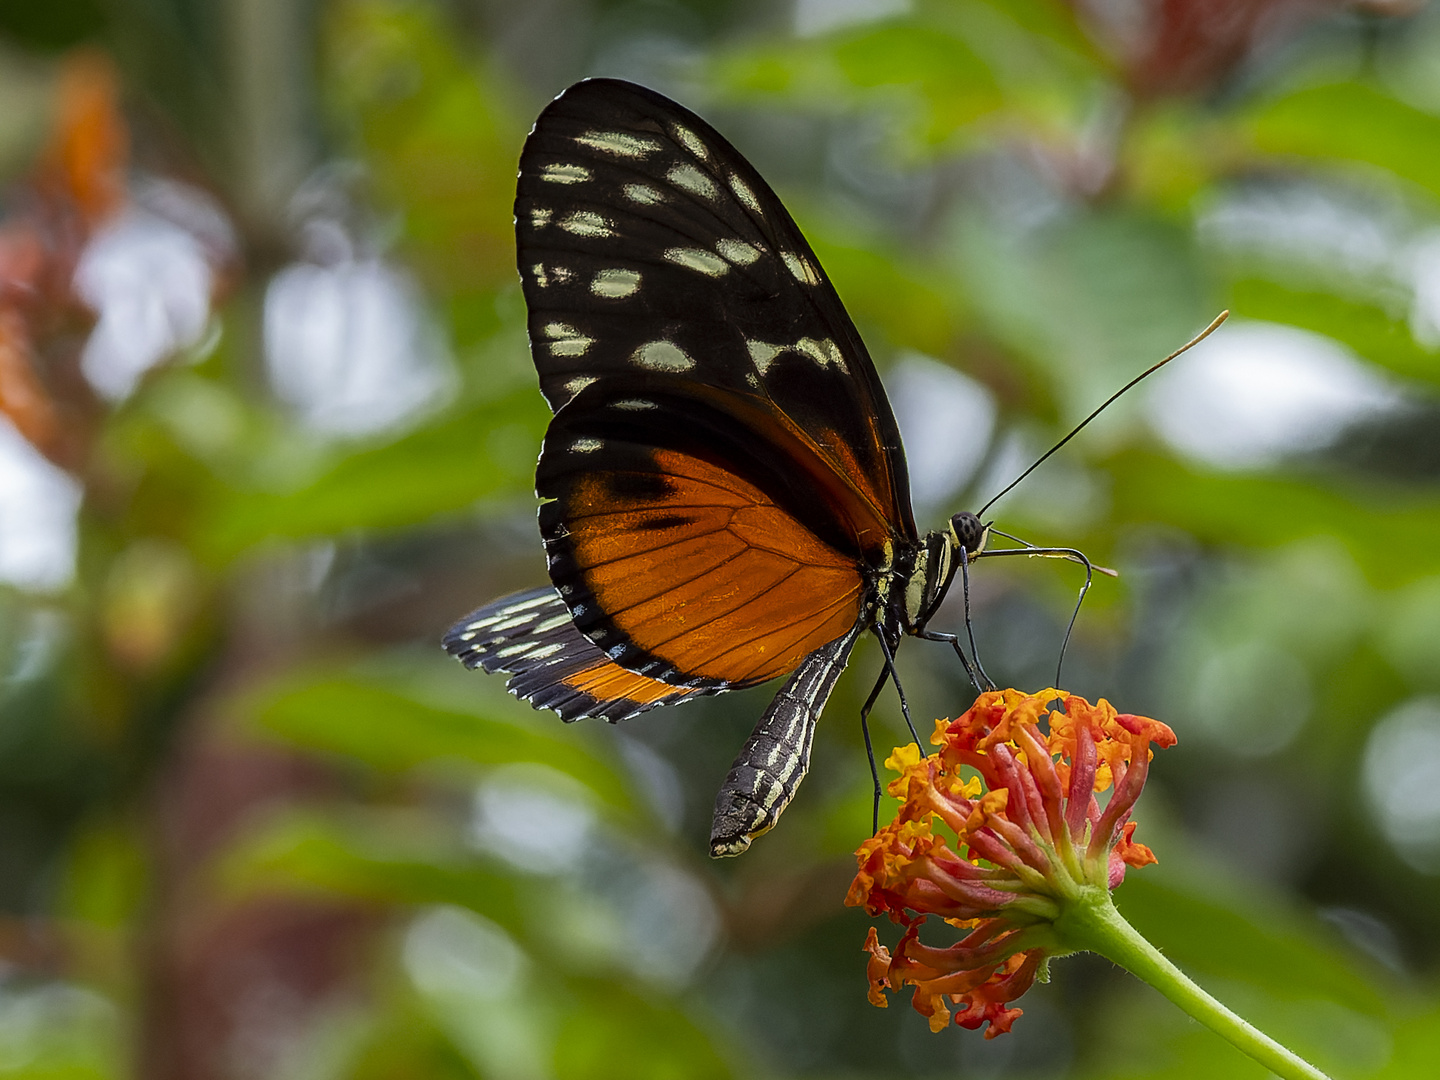 Tiger-Passionsblumenfalter im Regenwald Costa Ricas